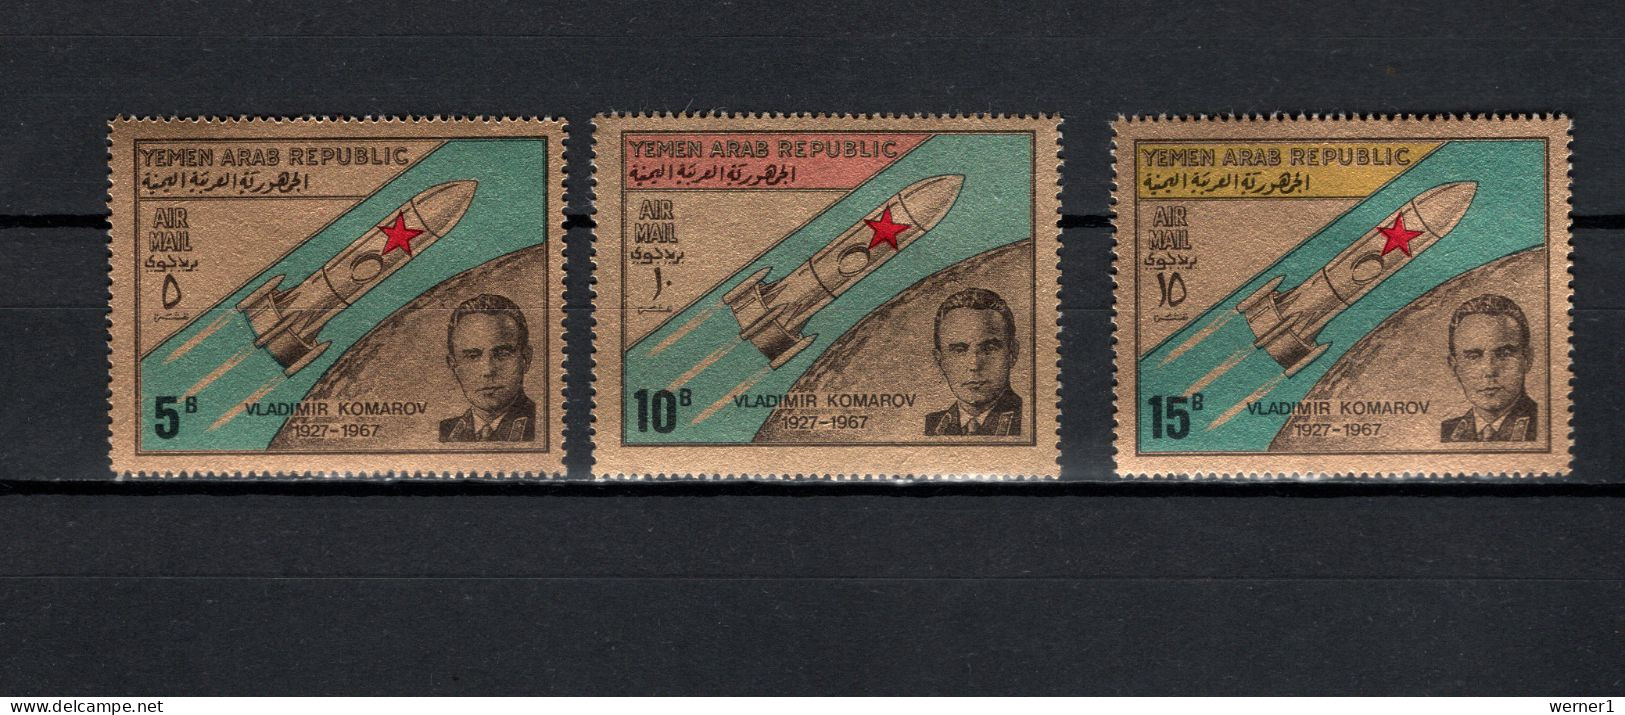 Yemen Arab Republic 1968 Space, Vladimir Komarov Set Of 3 Golden Colour MNH - Asien